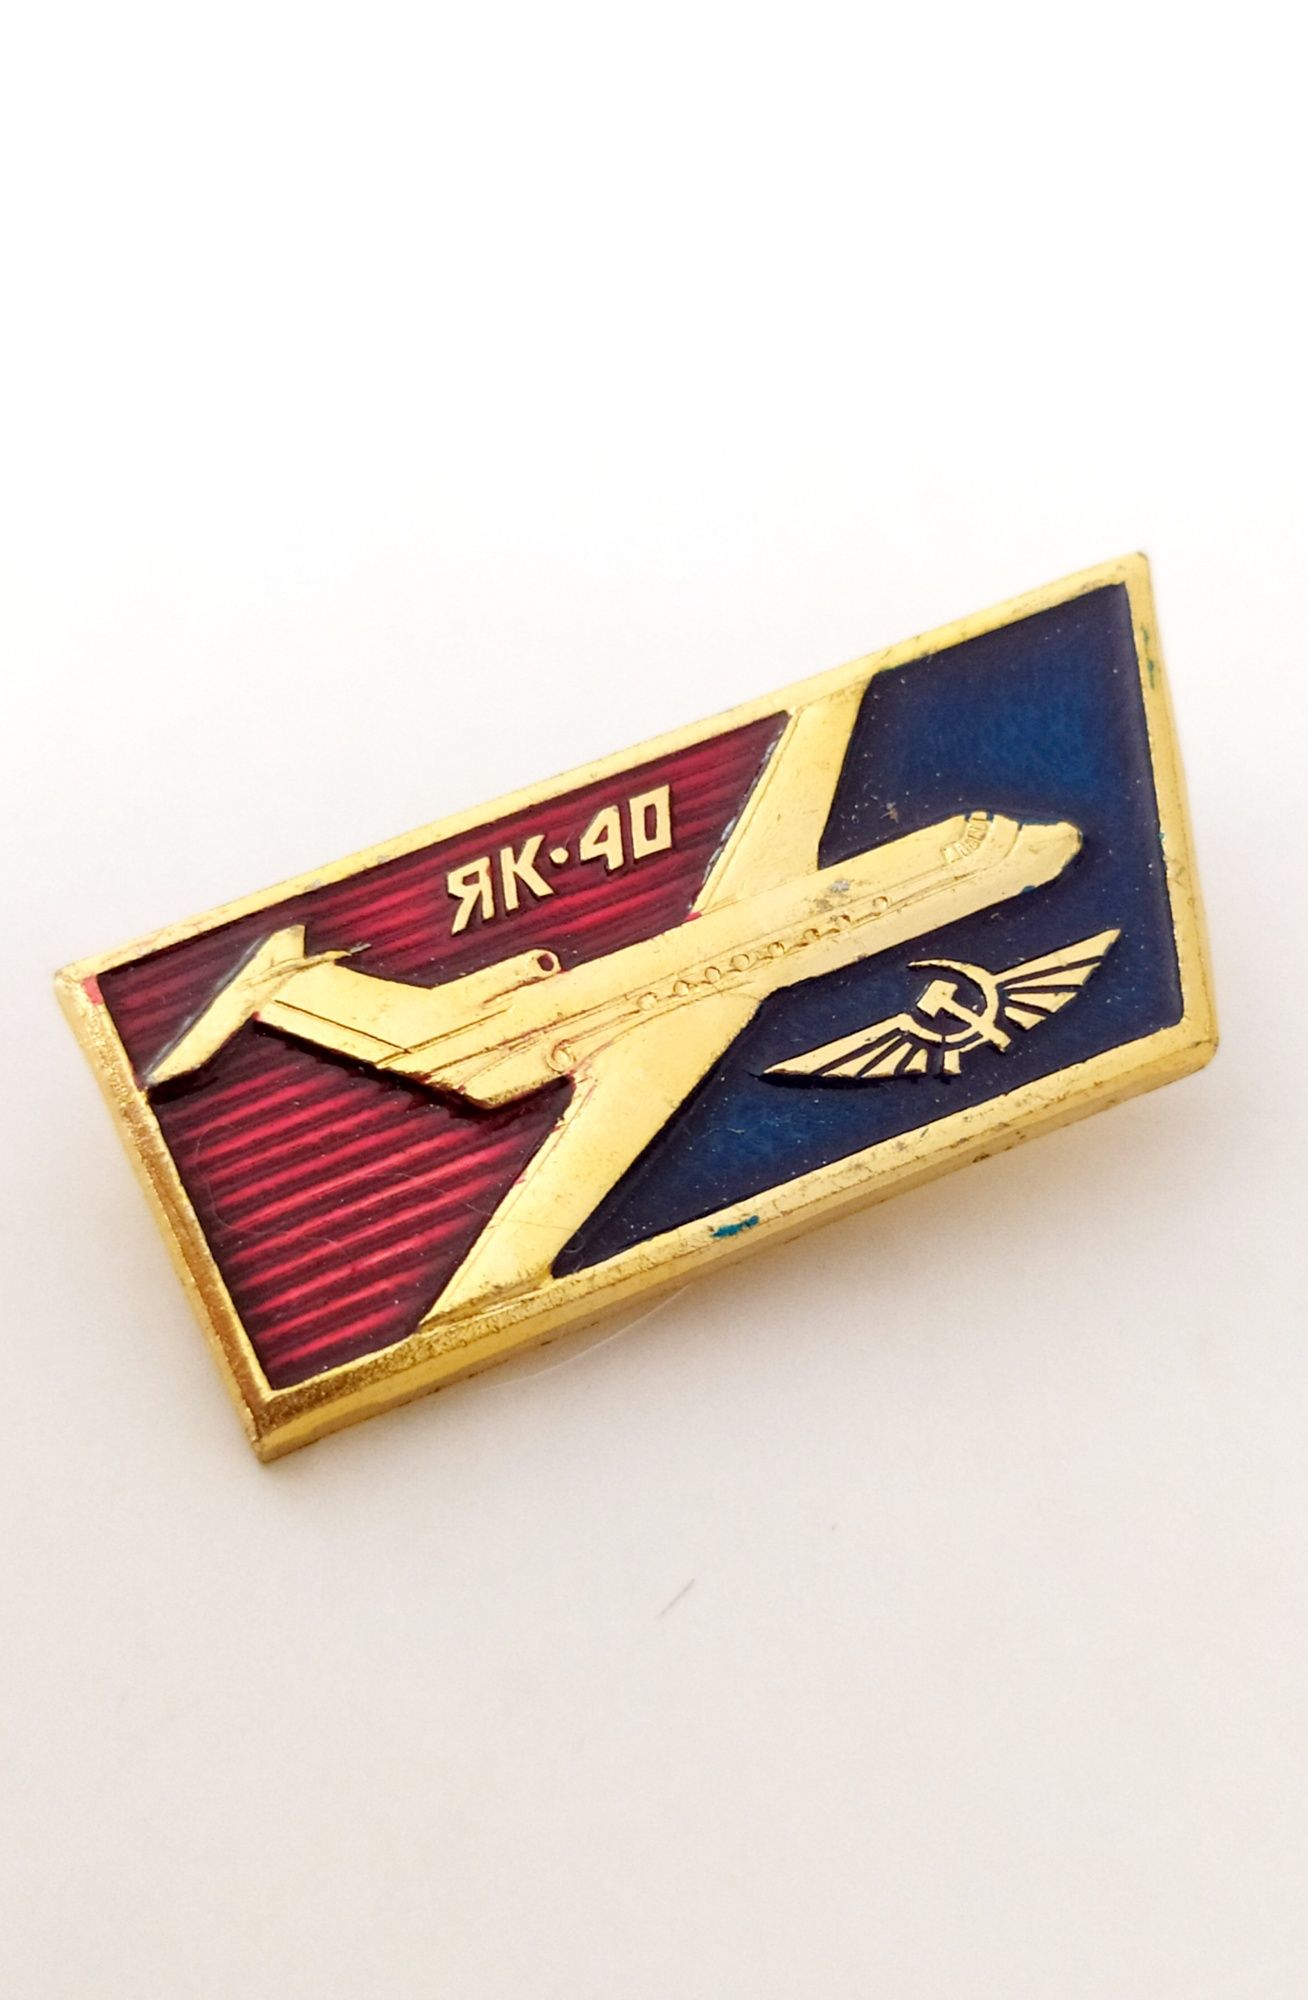 Значок ЯК 40 Аэрофлот СССР авиация авиационный самолёт Boeing Airbus